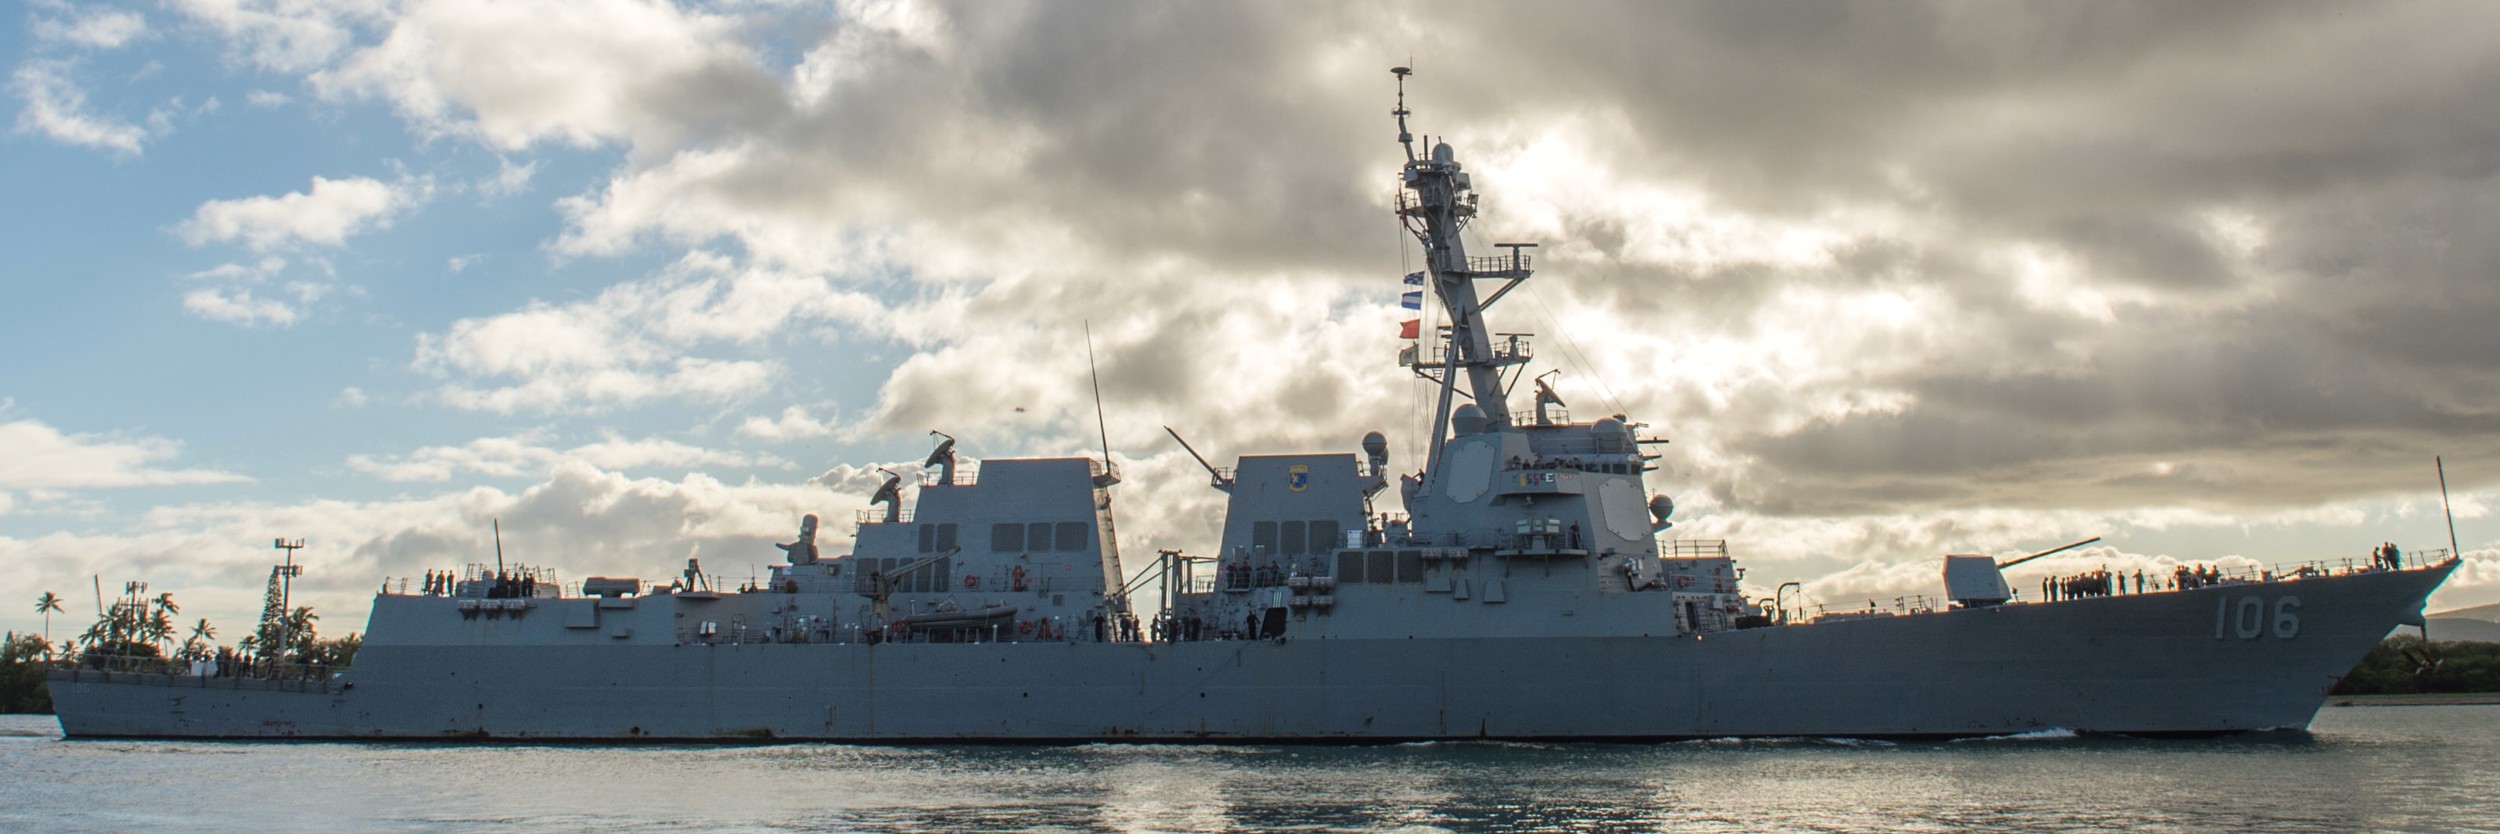 ddg-106 uss stockdale arleigh burke class guided missile destroyer aegis us navy pearl harbor hawaii 99